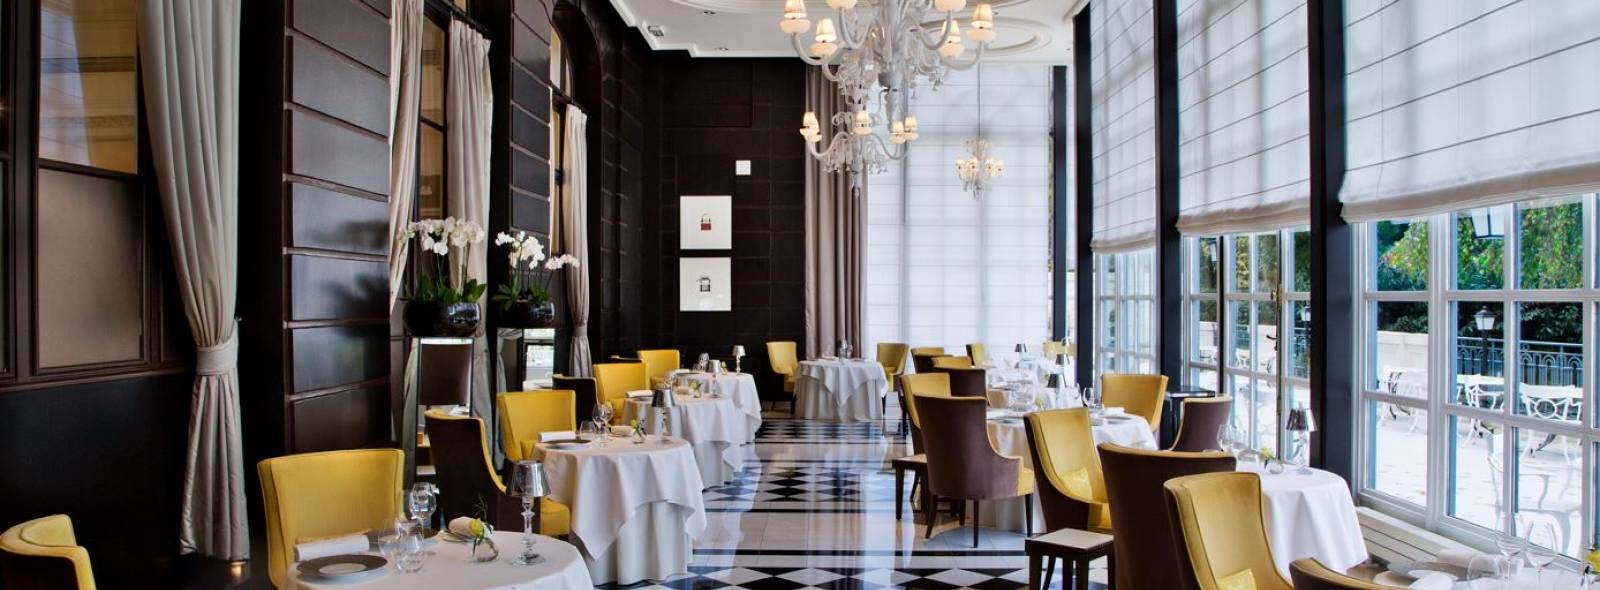 restaurant Gordon Ramsay au Trianon 2020 SMall Copy Copy 2